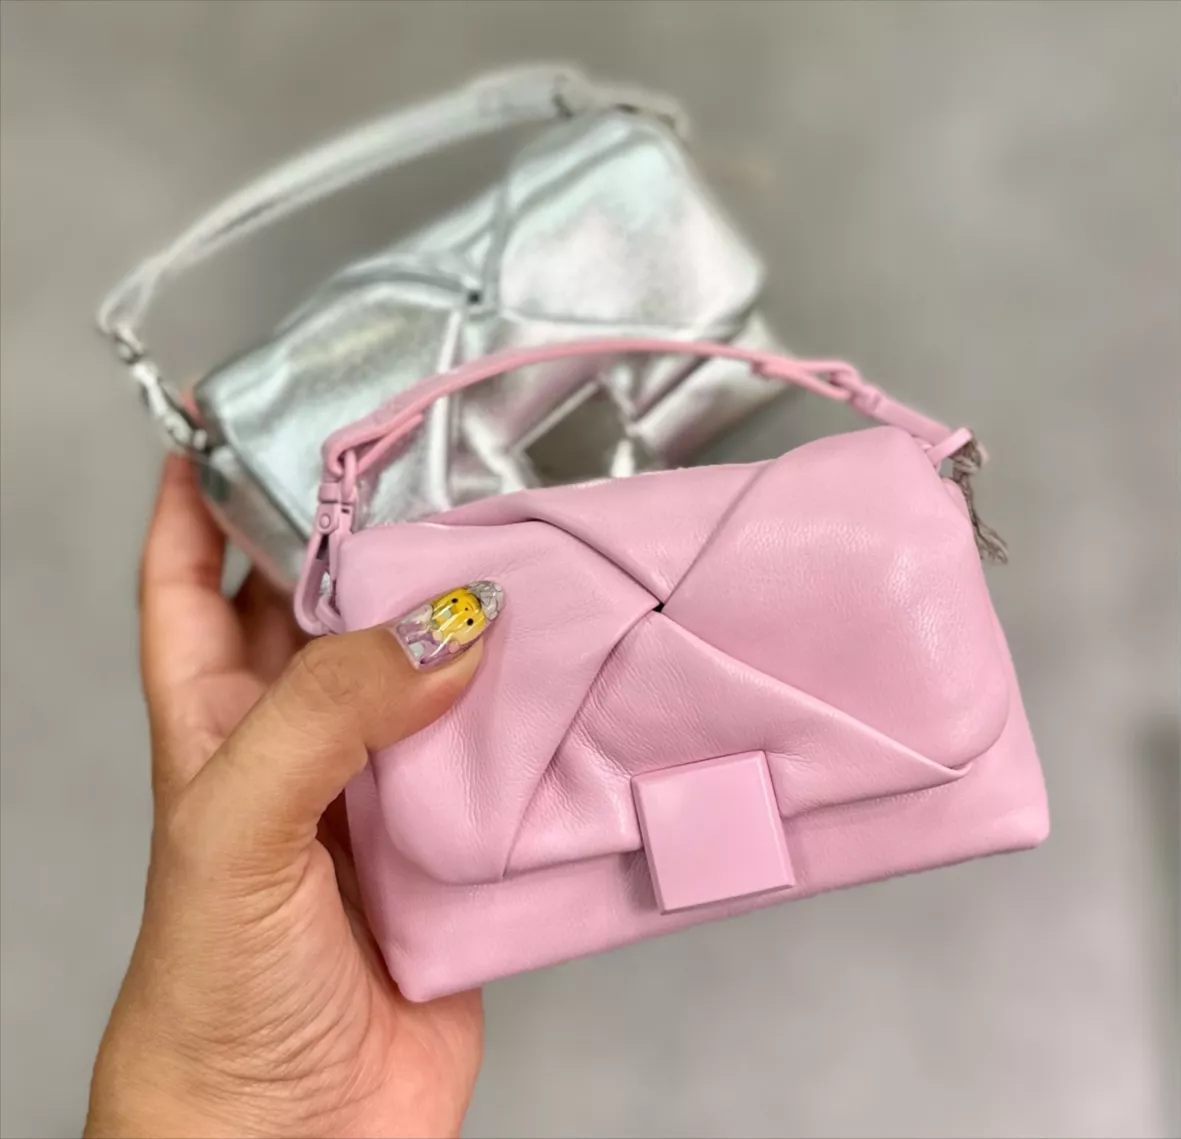 Micro Nano Satchel Handbag - A New Day™ Light Pink : Target